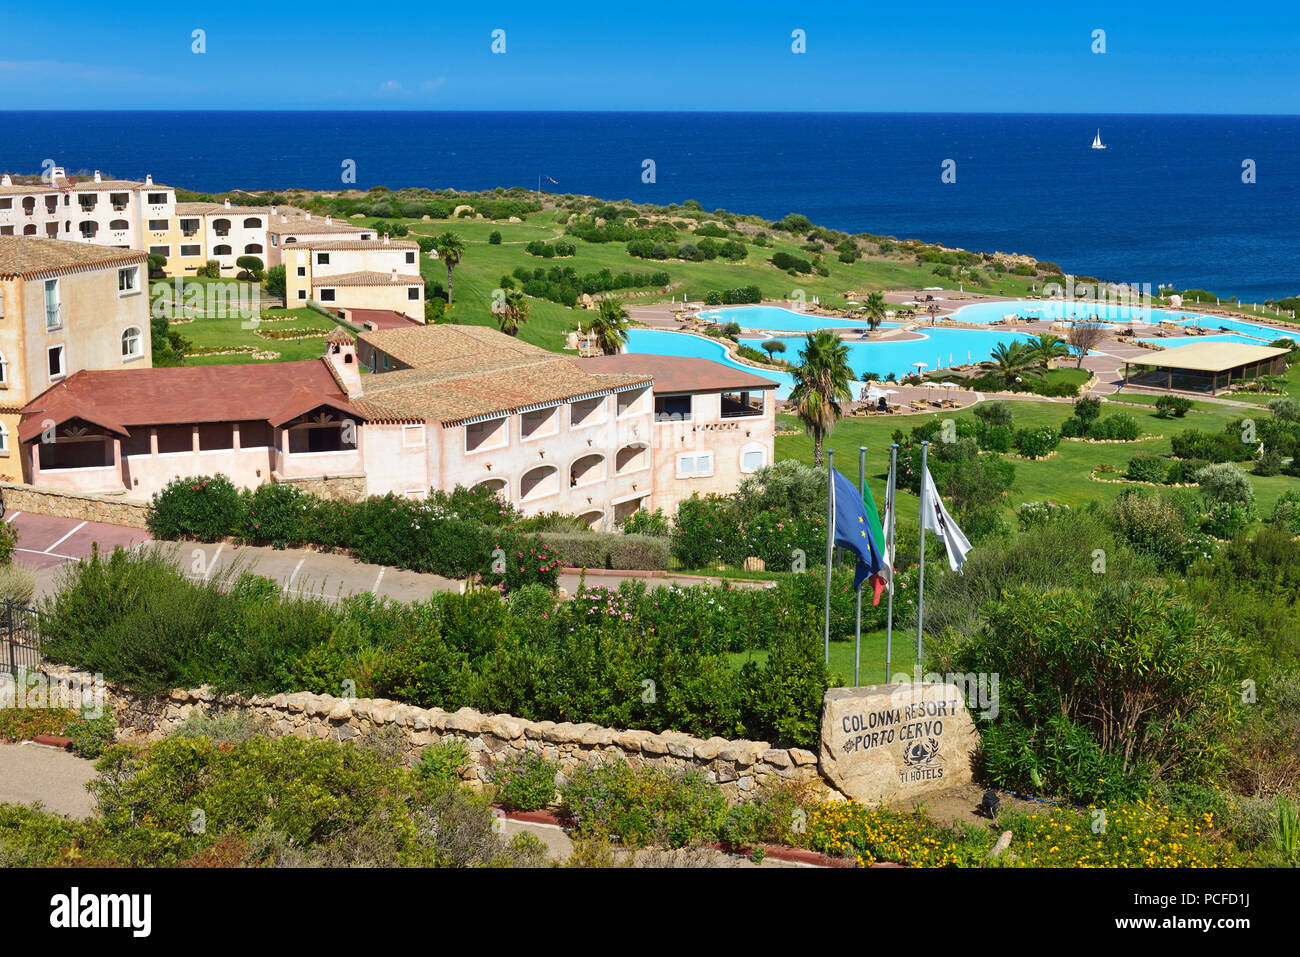 Golf Club Colonna Resort Porto Cervo, Sardinia, Italy Stock Photo - Alamy